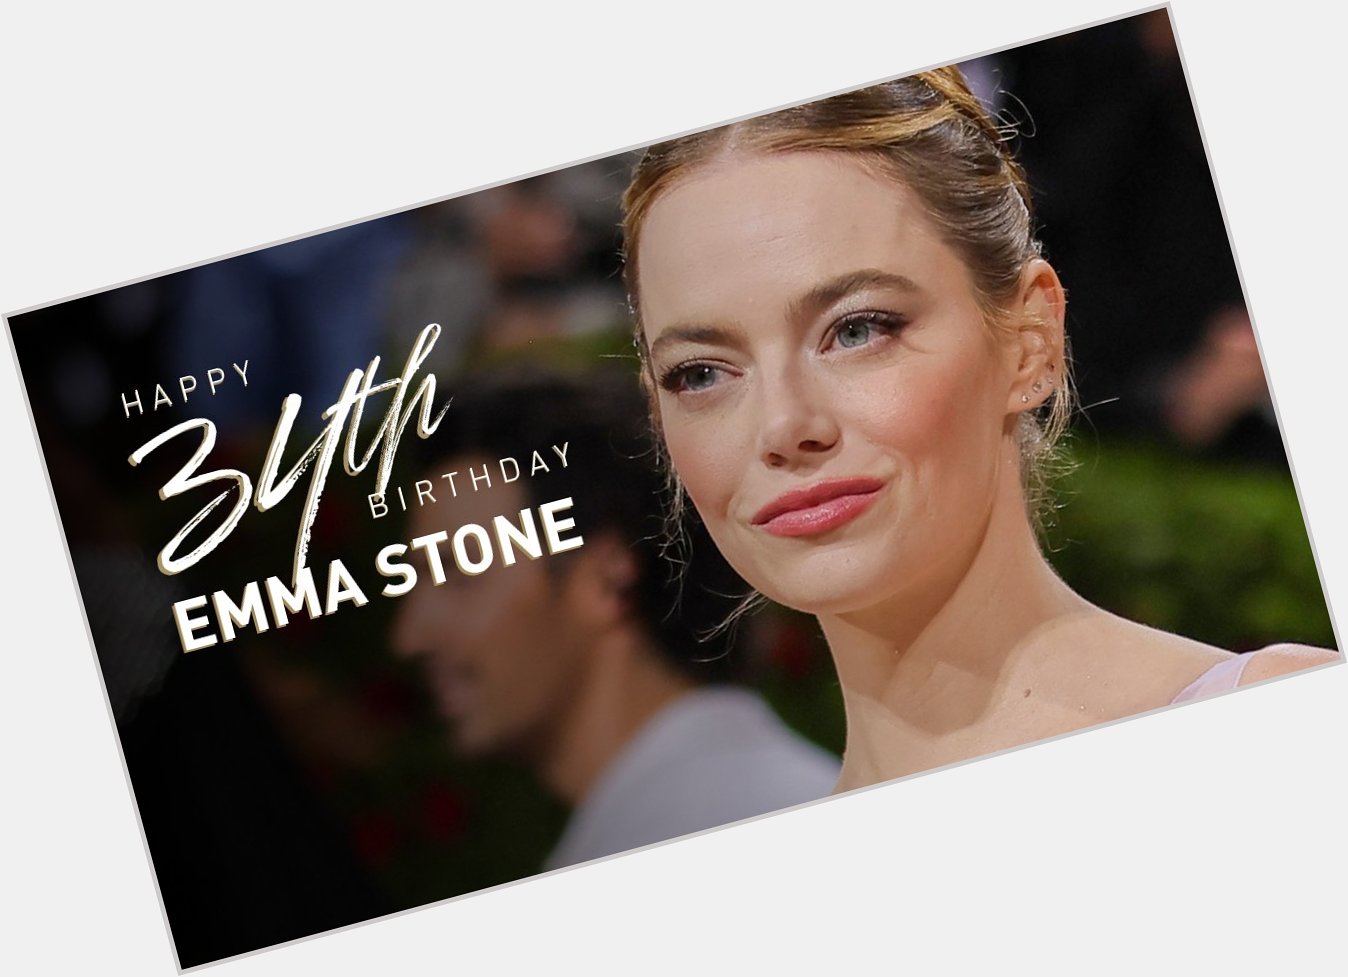 Happy 34th birthday to the legendary Actress Emma Stone! 